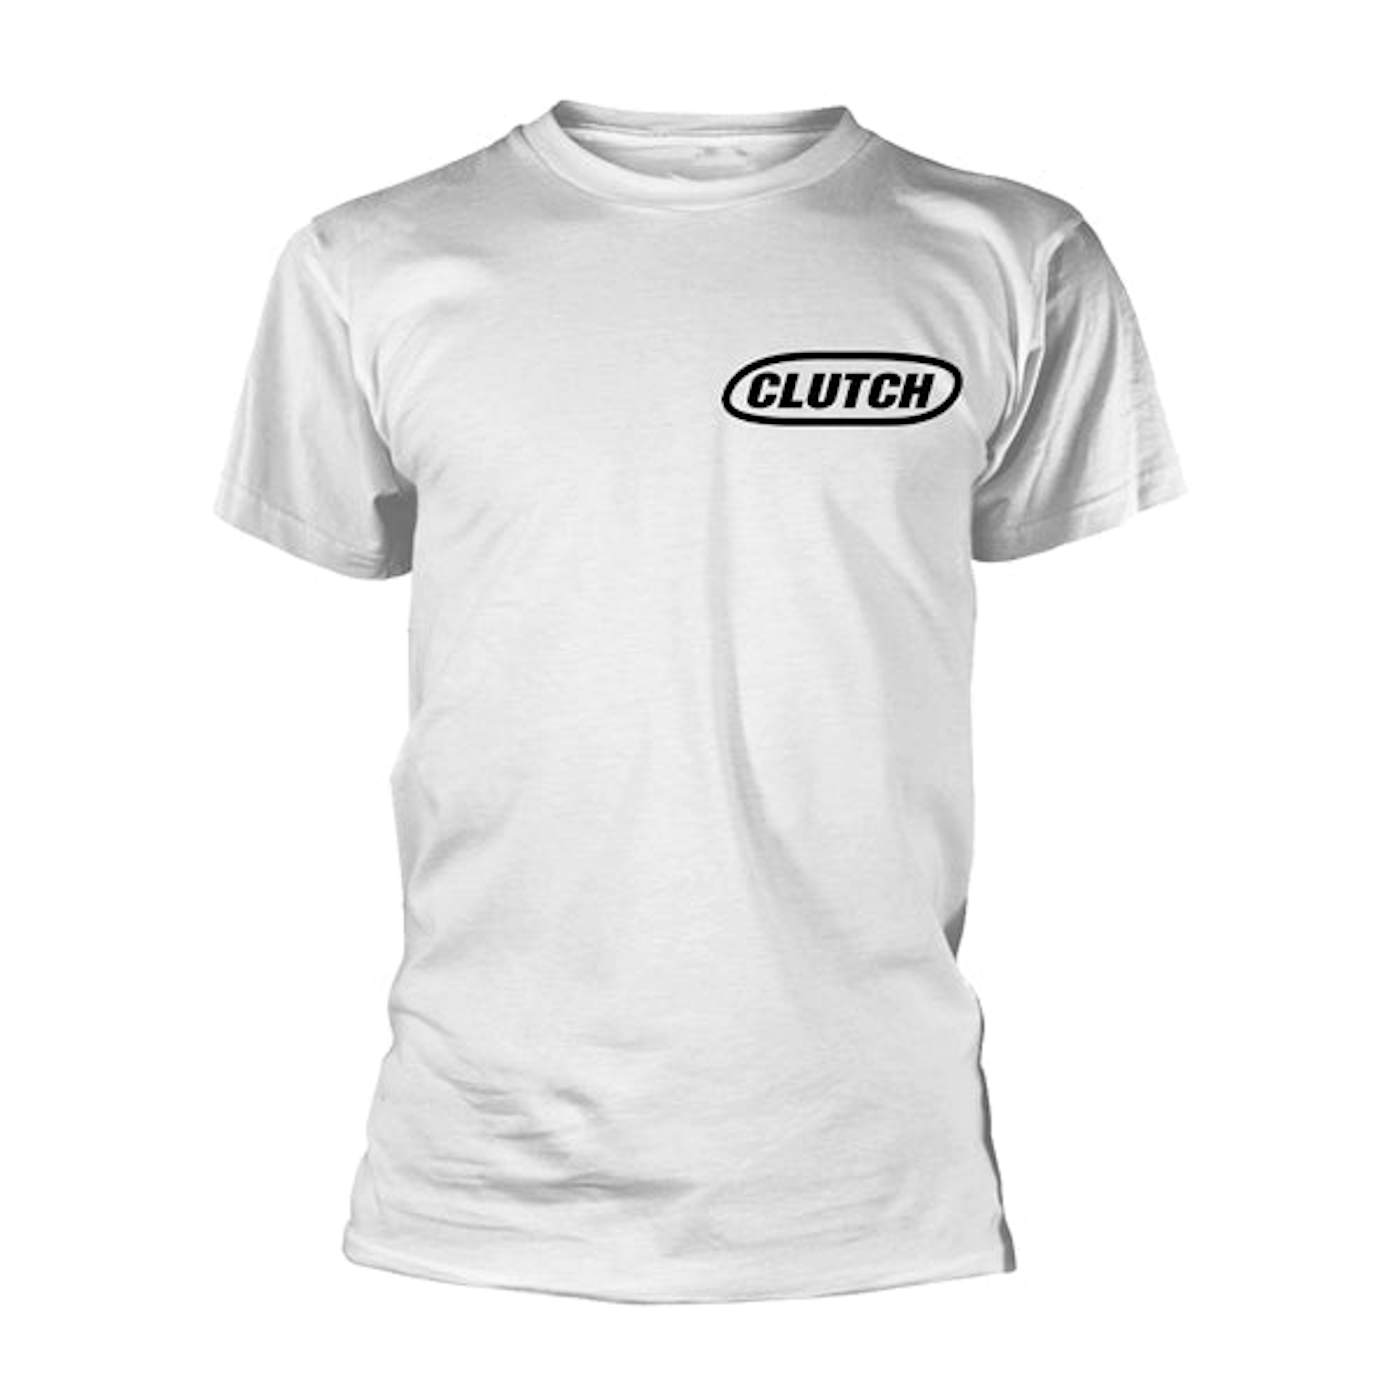 Clutch T-Shirt - Classic Logo (Black/White)